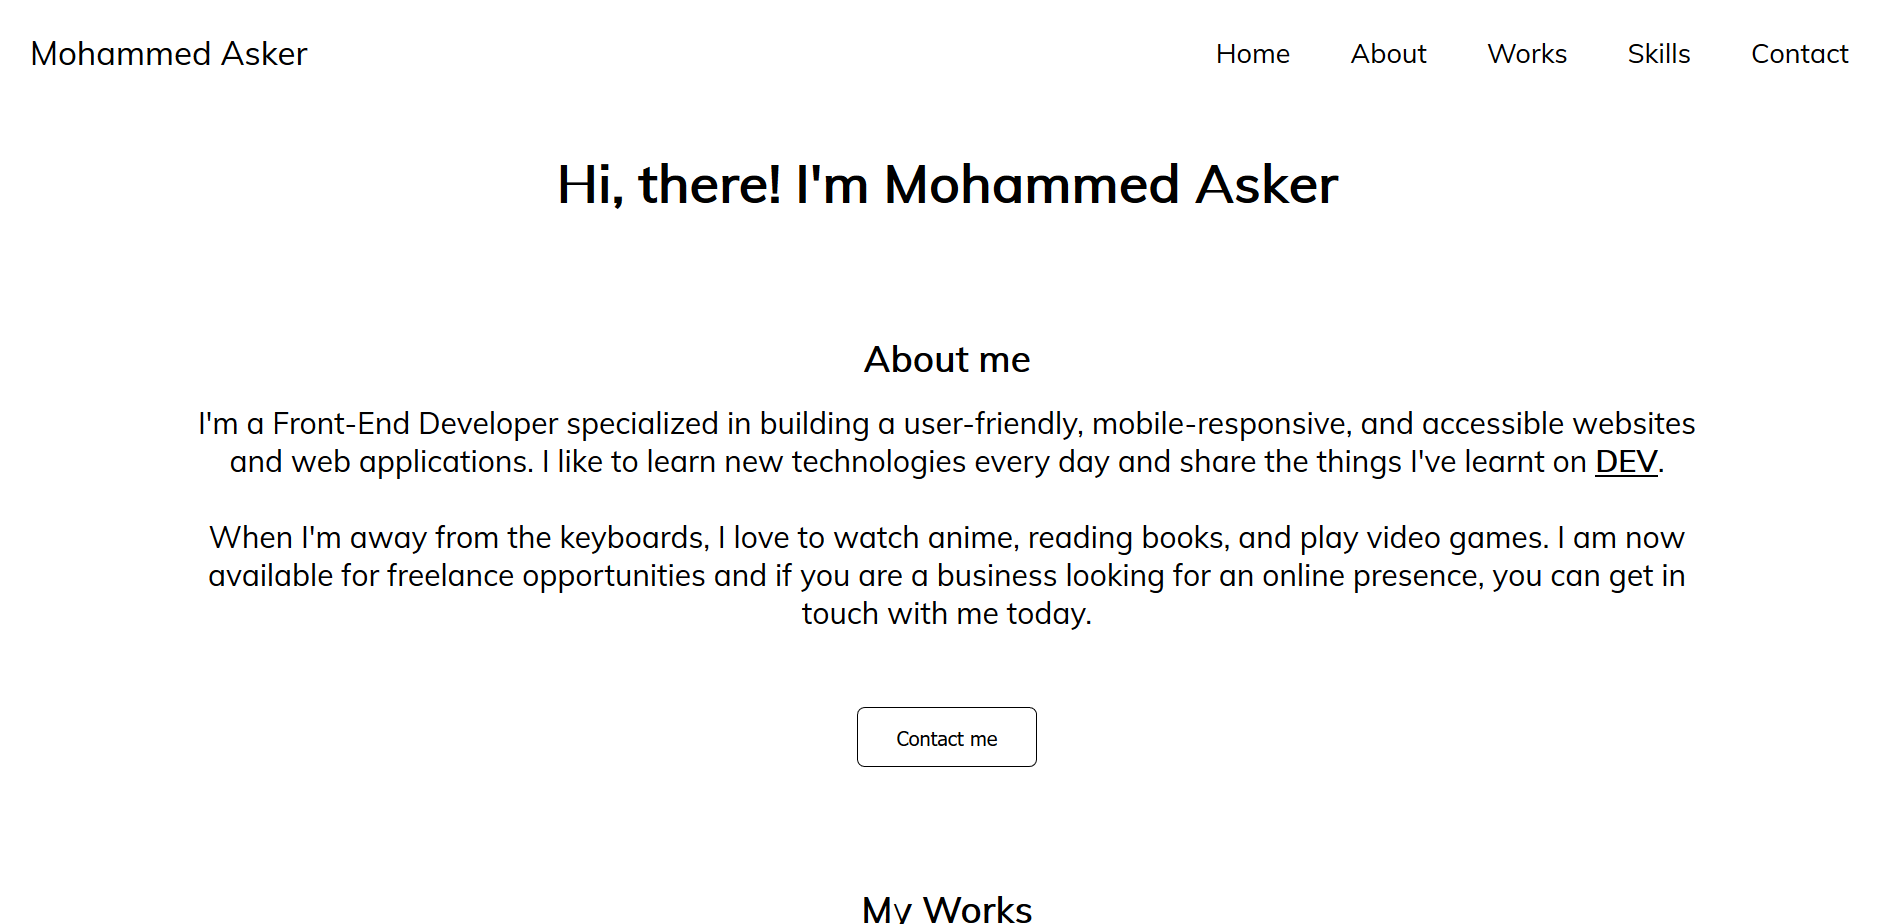 A screenshot of my portfolio website for displaying my work